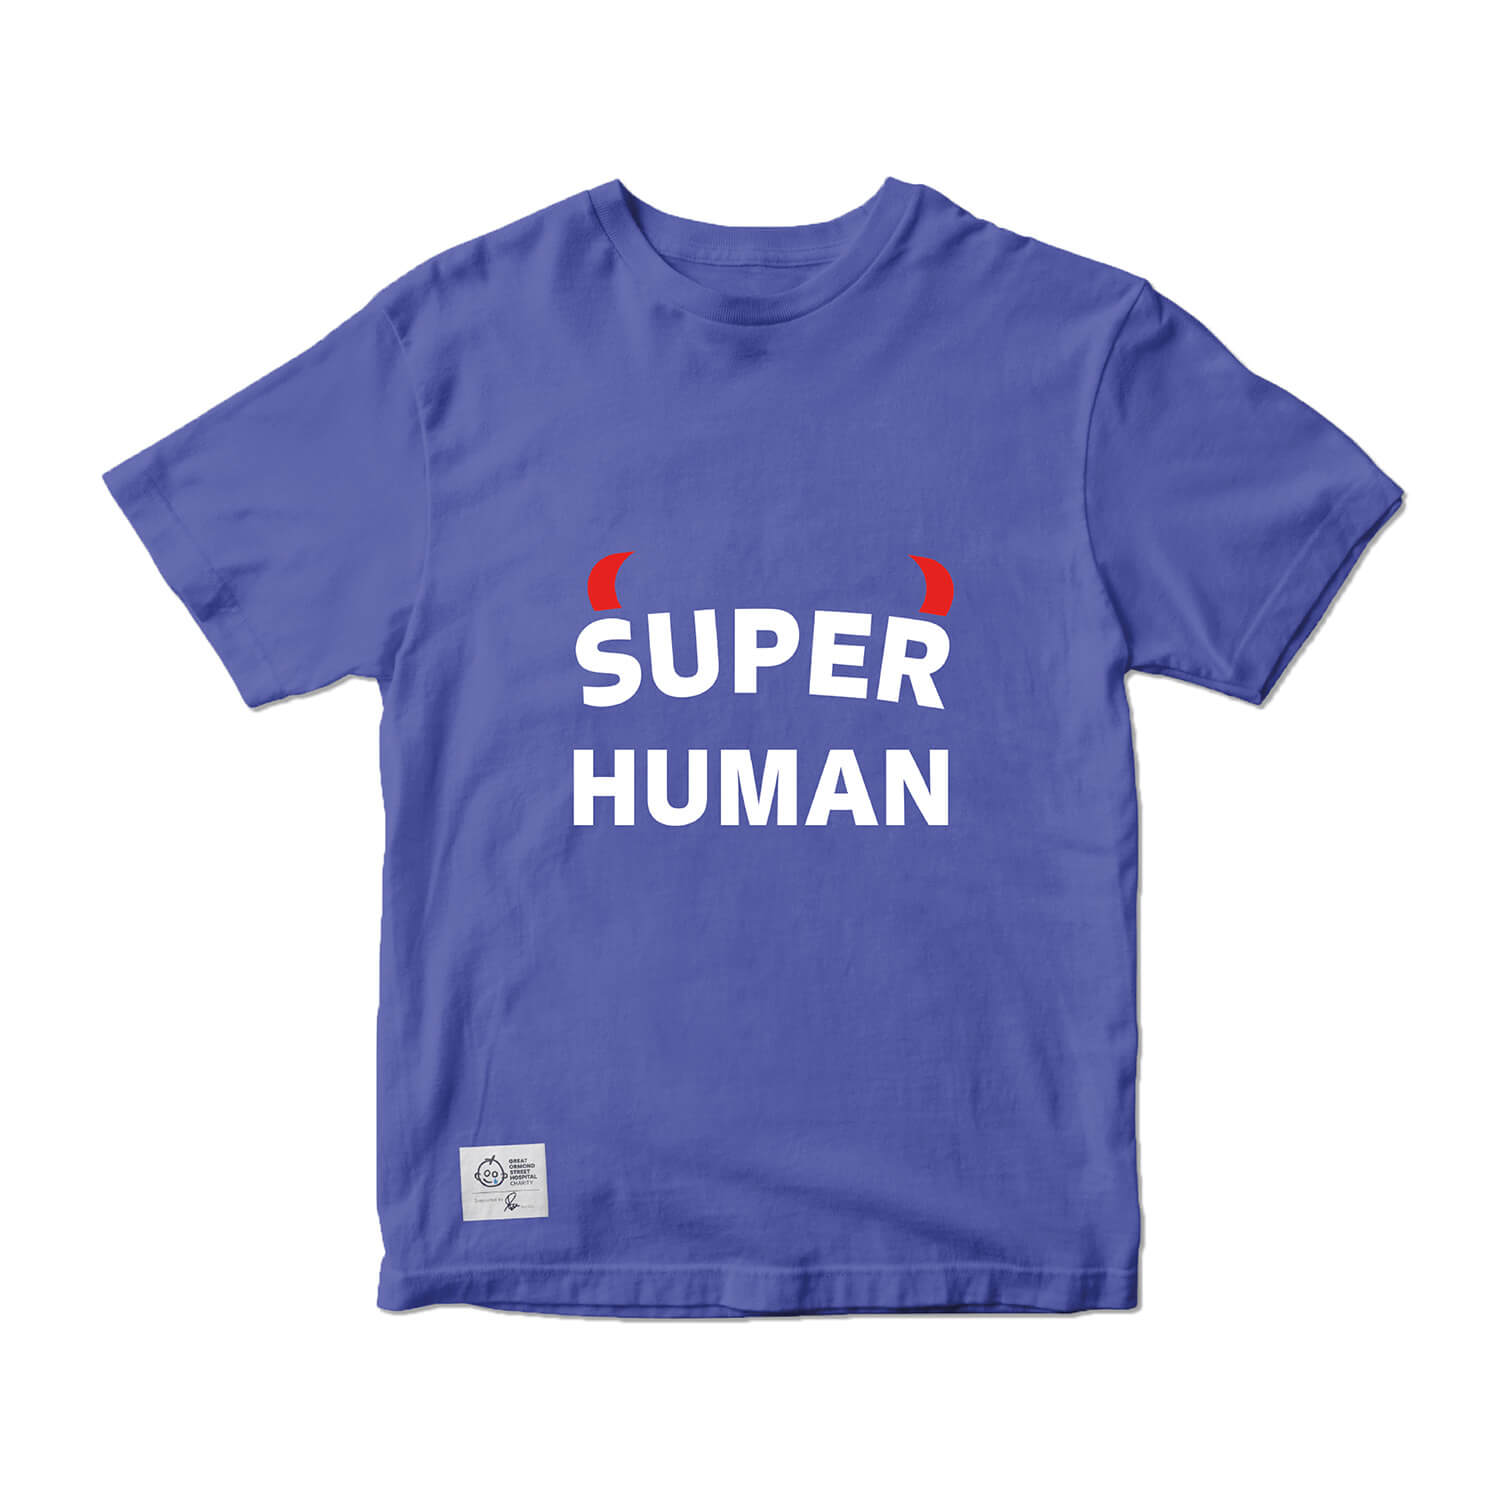 Adults blue super human t-shirt